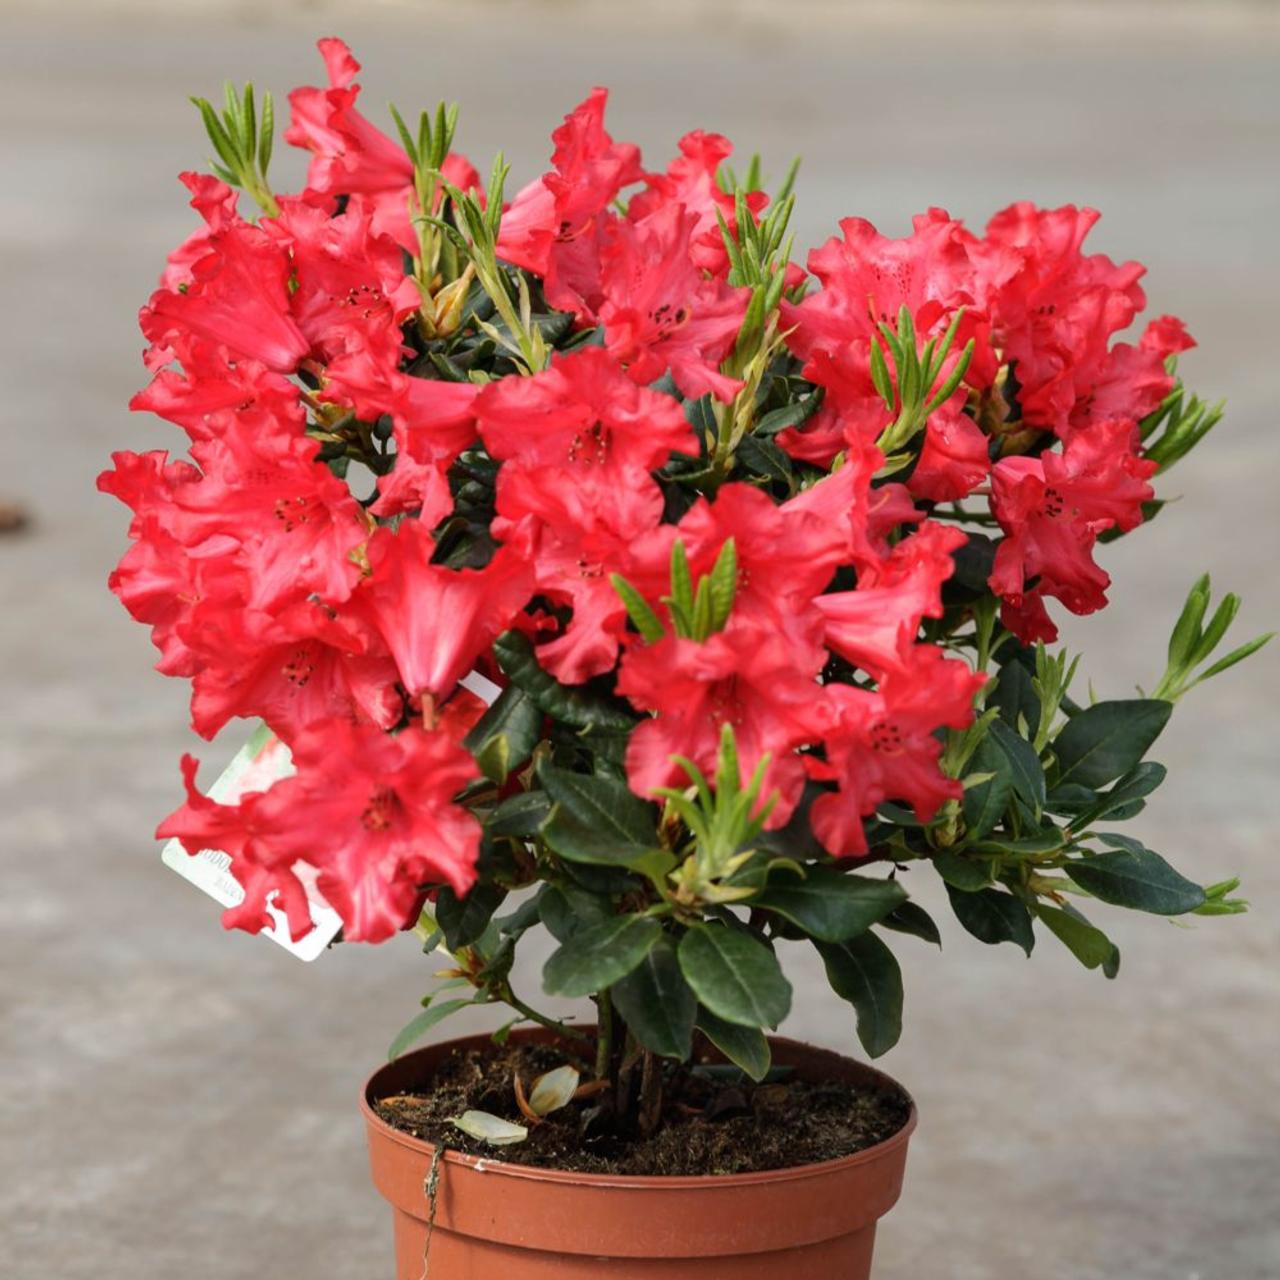 Rhododendron 'Baden Baden' plant